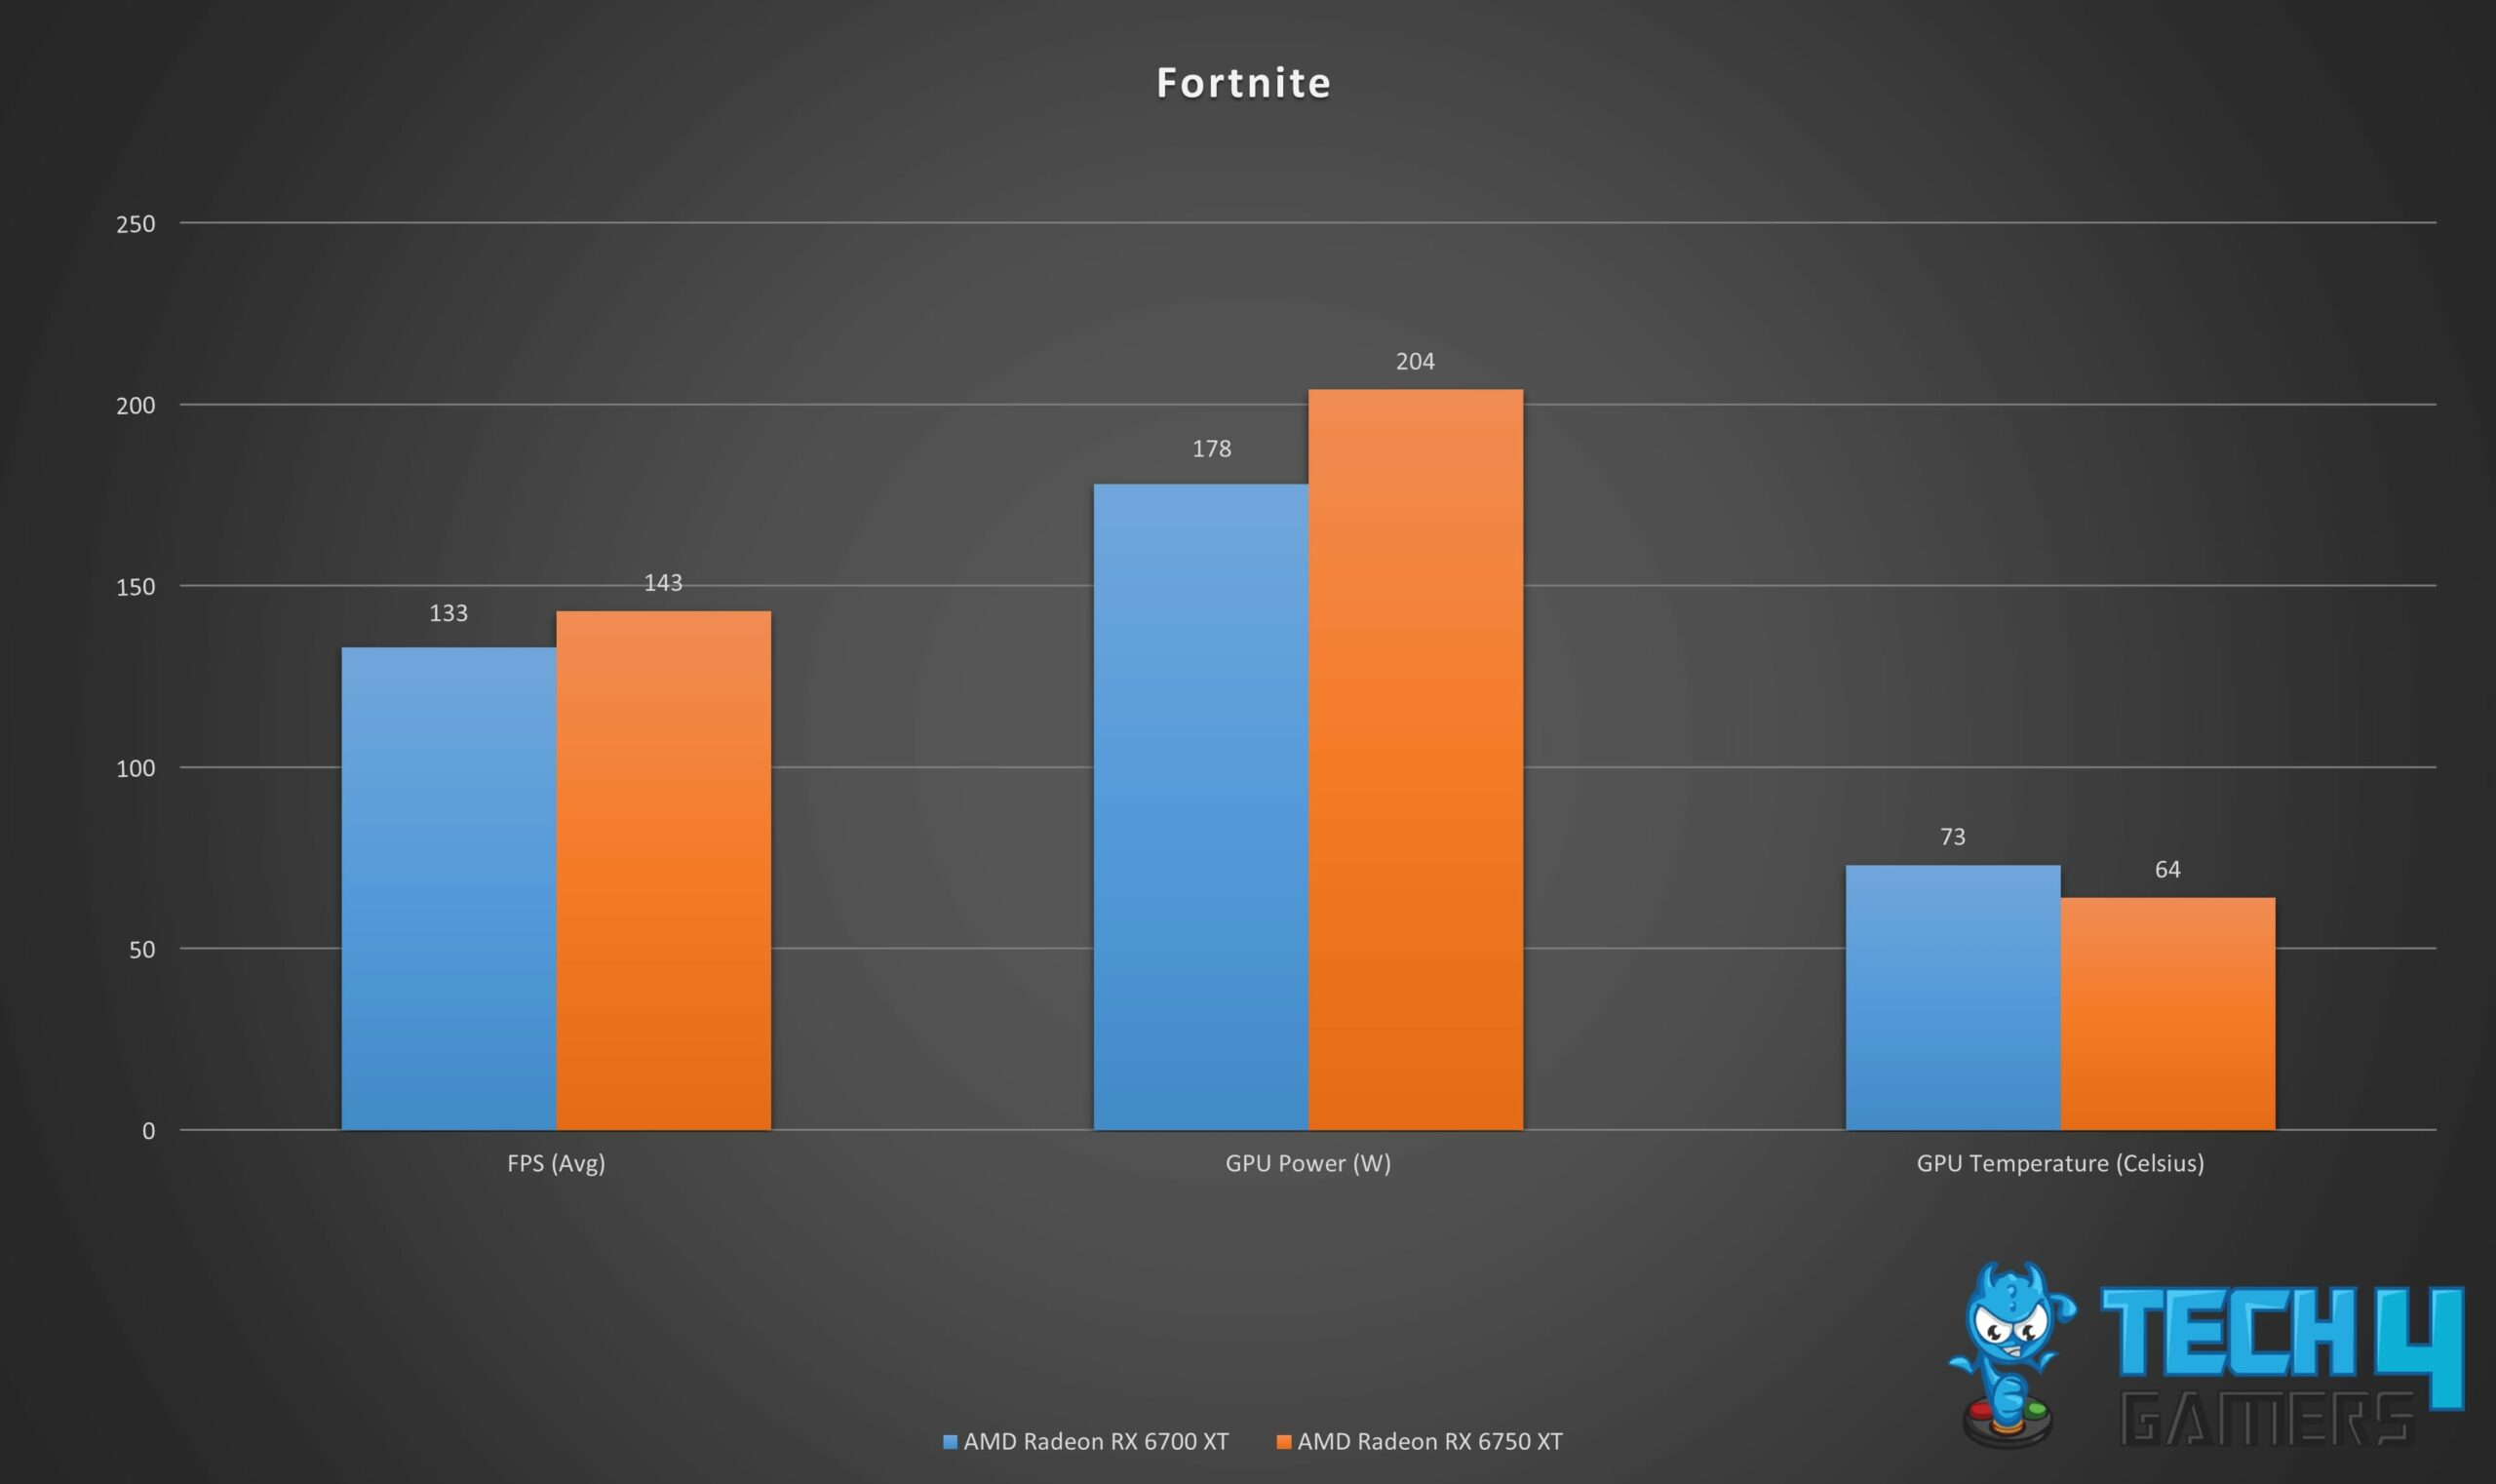 Gaming performance graph